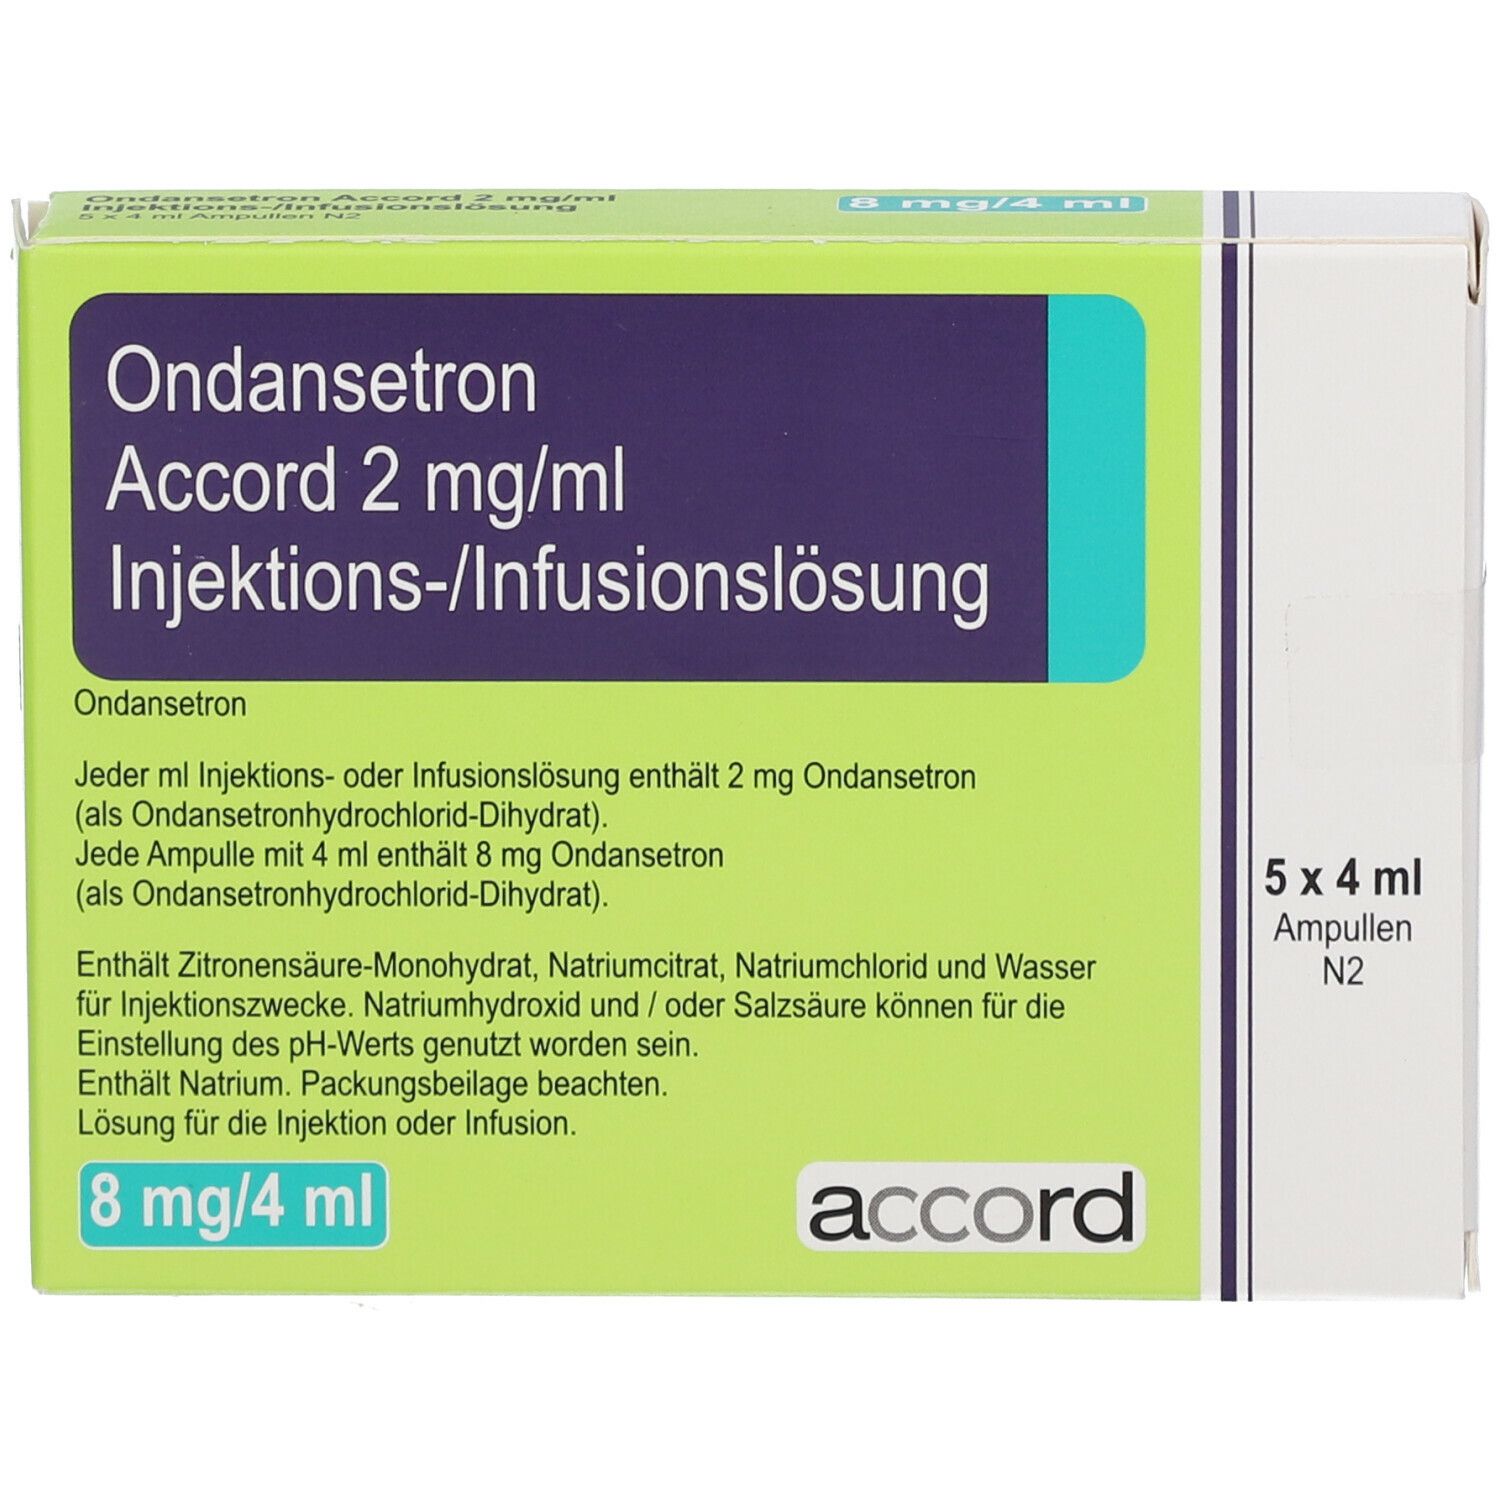 Ondansetron Accord 8 mg/4 ml